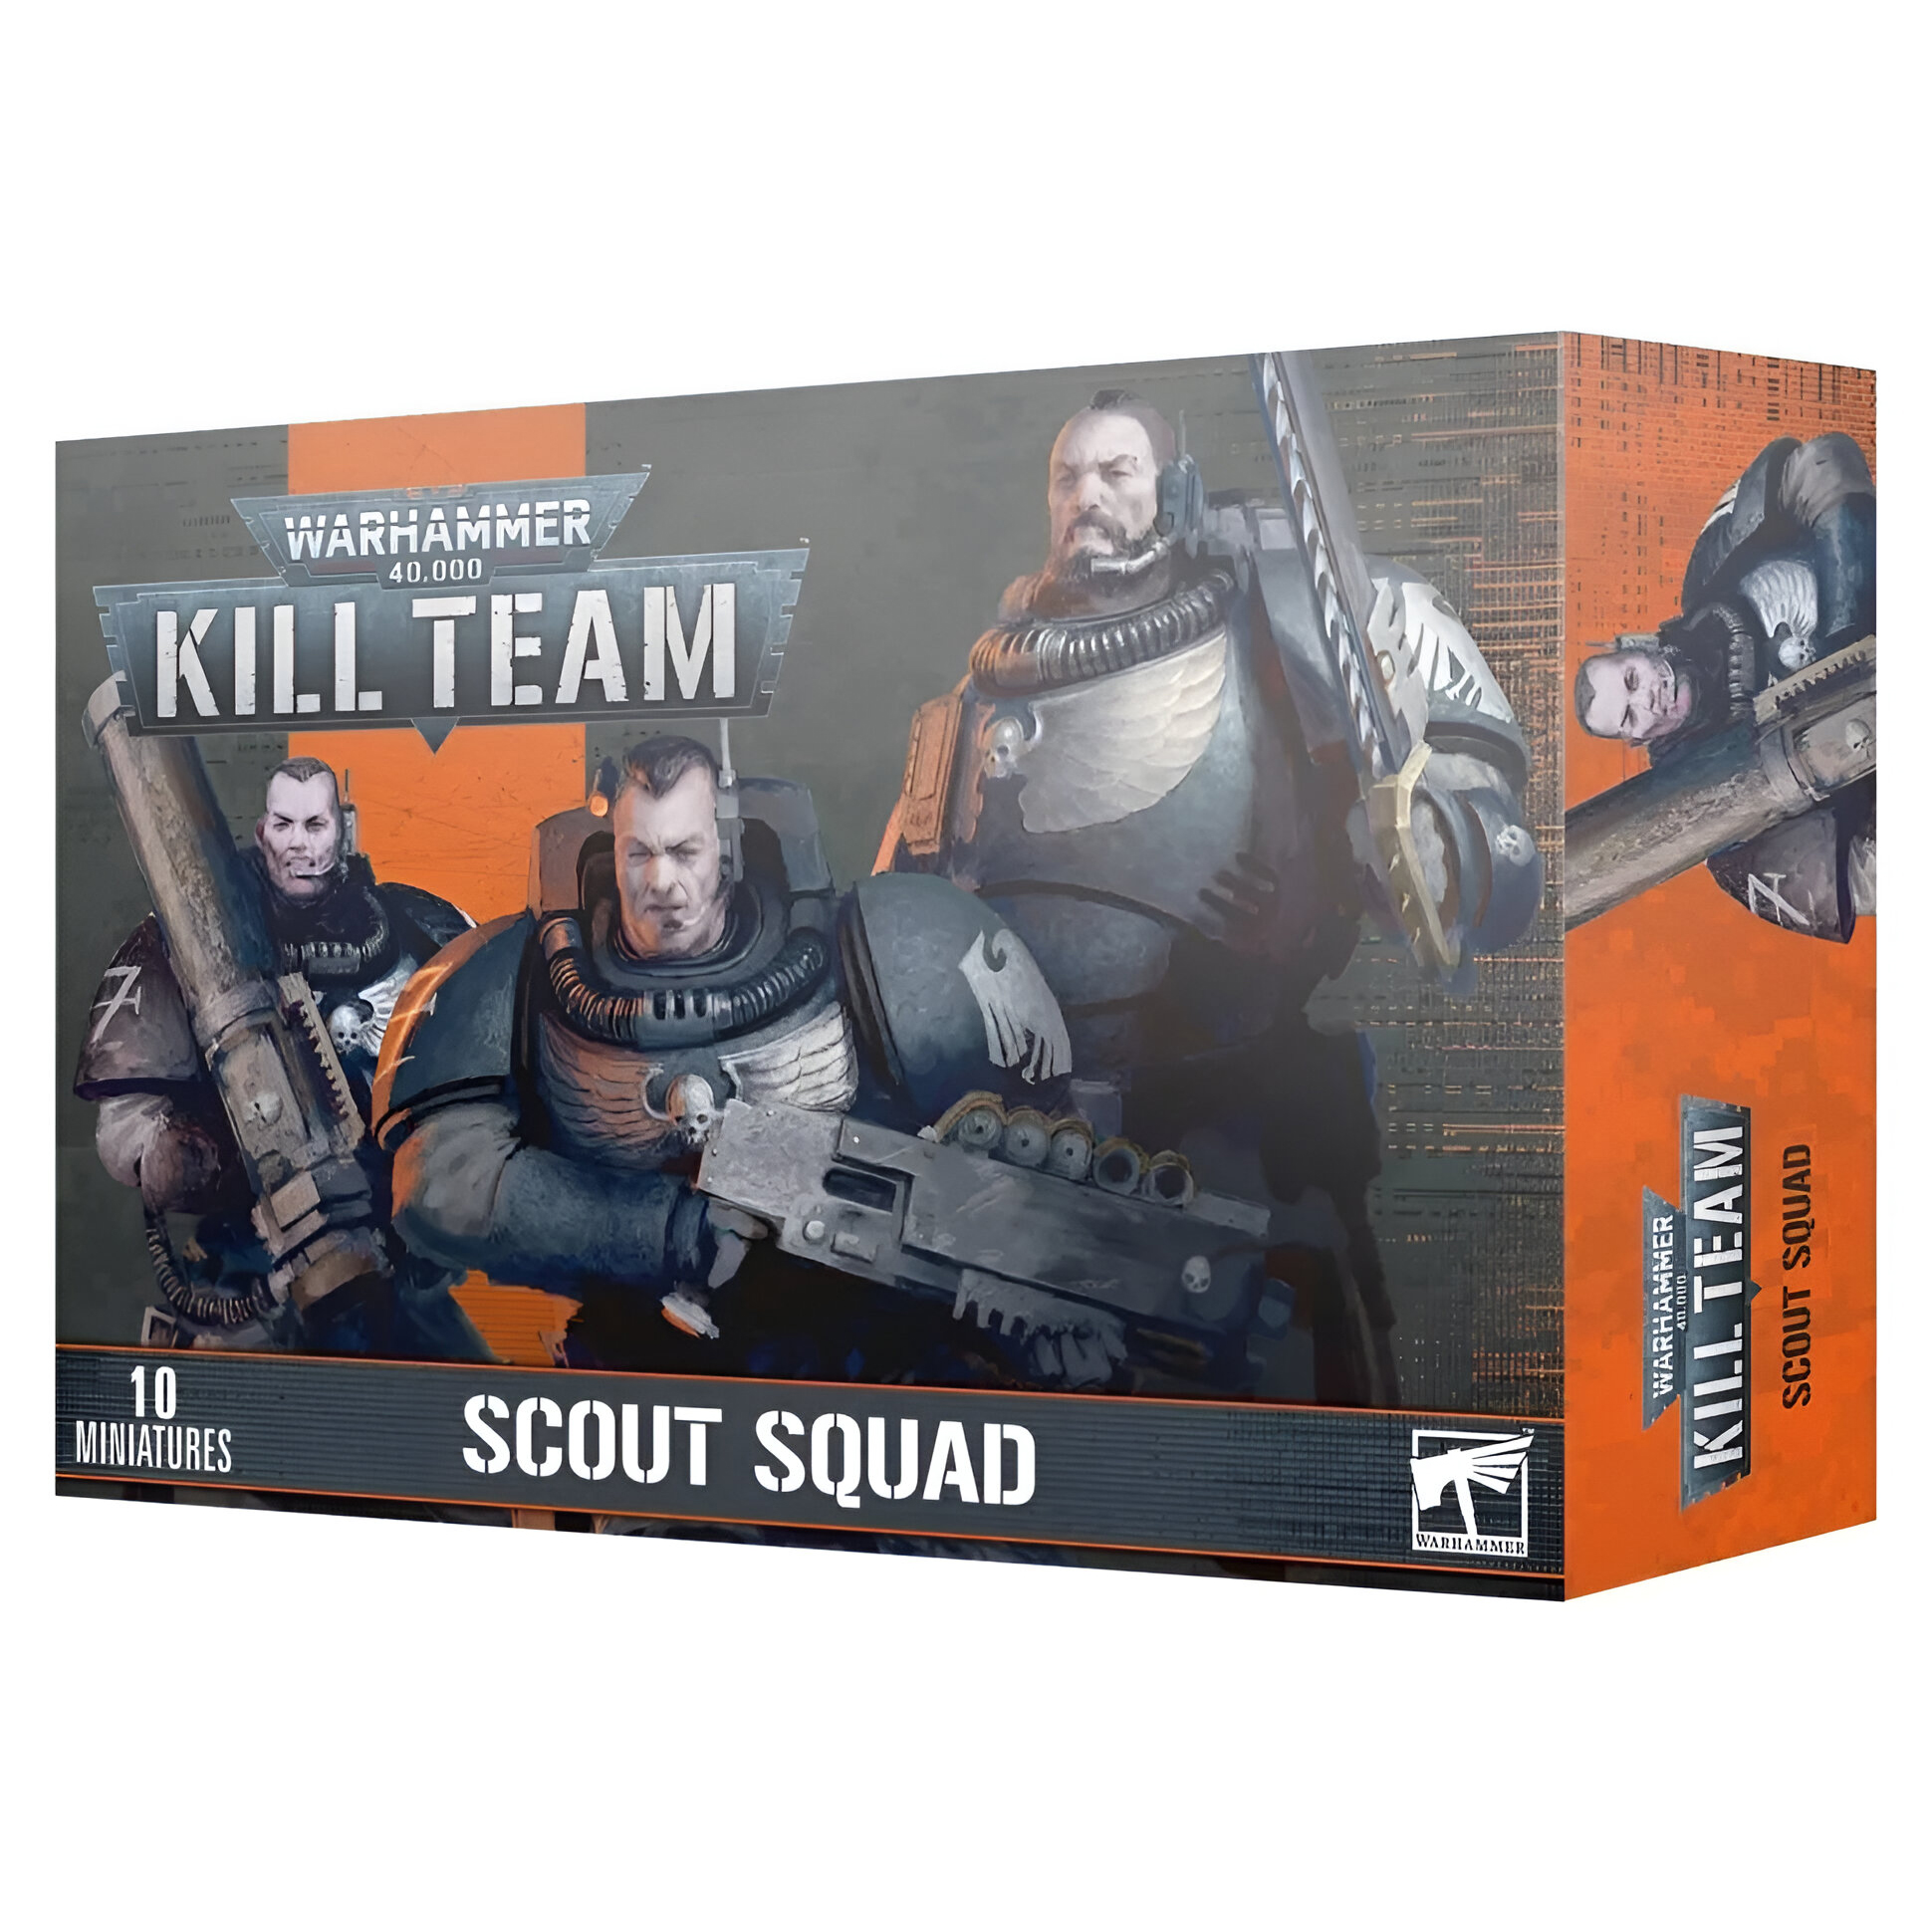 Миниатюры для игры Games Workshop Warhammer 40000 Kill Team Scout Squad 103-44 to kill a mockingbird